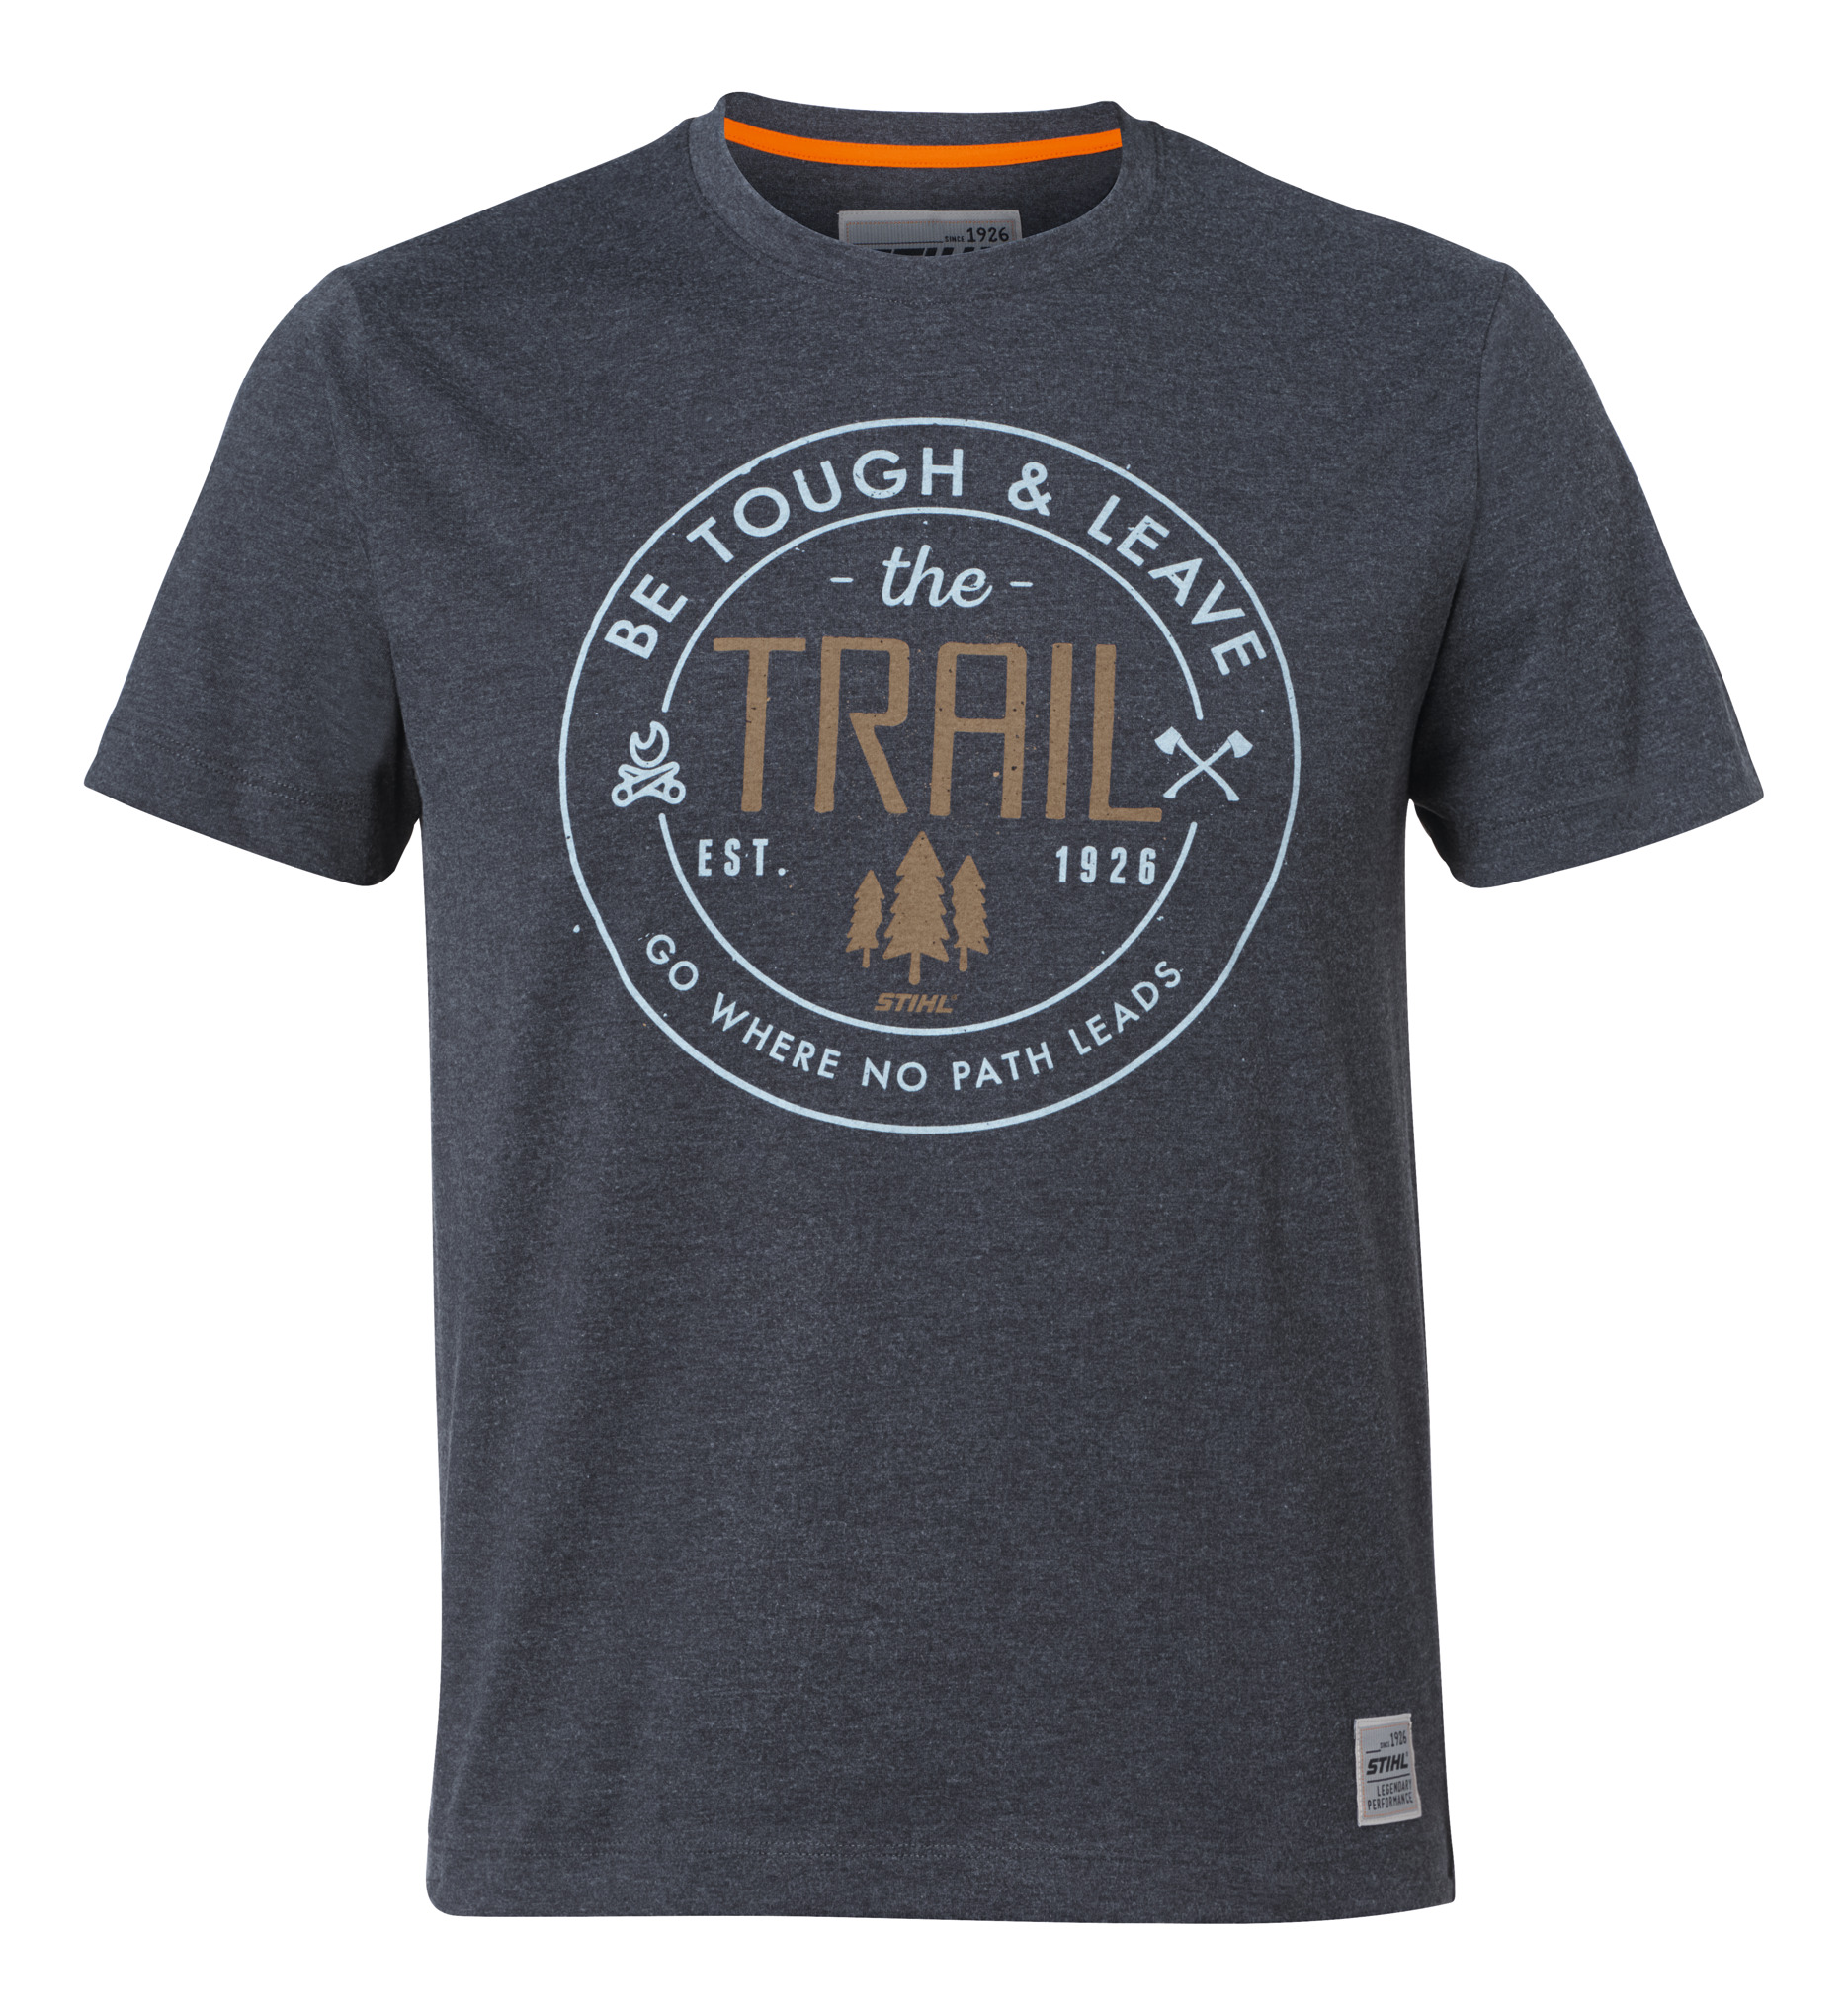 T-shirt gris foncé "Be tough"